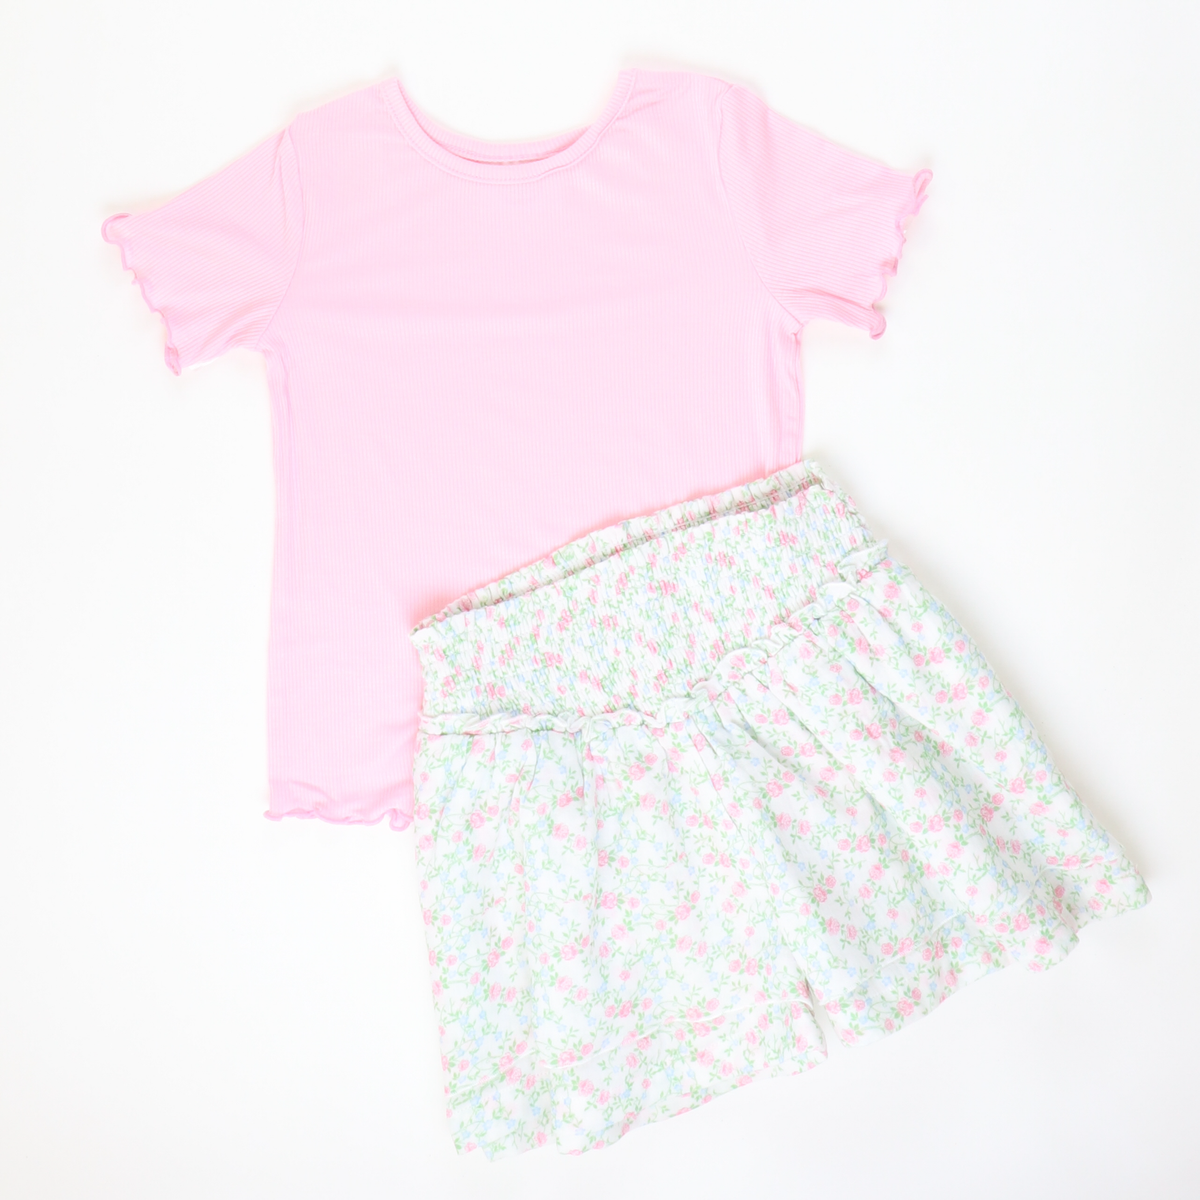 Flowy Shorts - Pink & Blue Floral